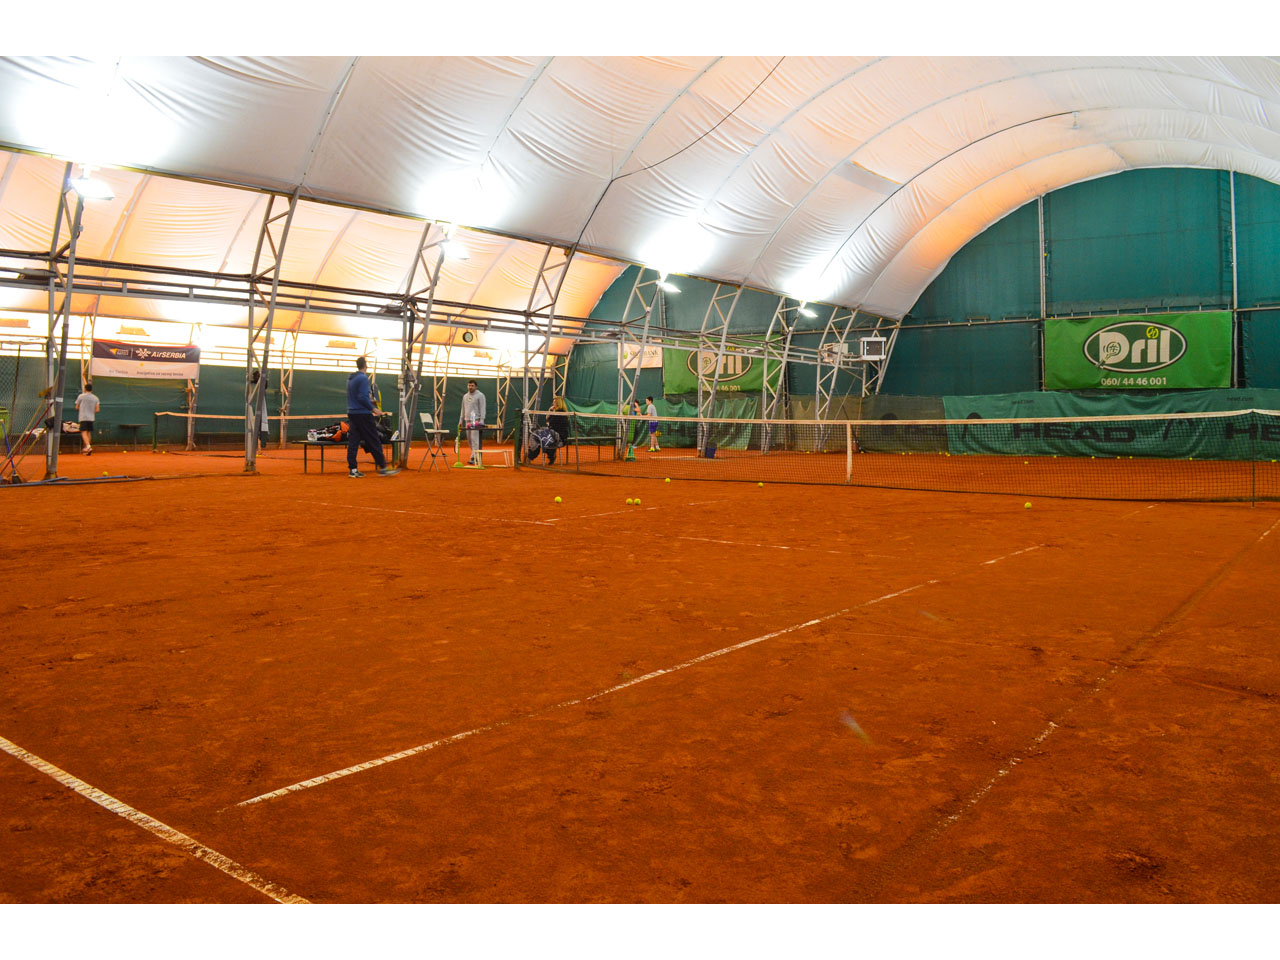 TENISKI KLUB DRIL Teniski klubovi, teniski tereni, škole tenisa Beograd - Slika 4